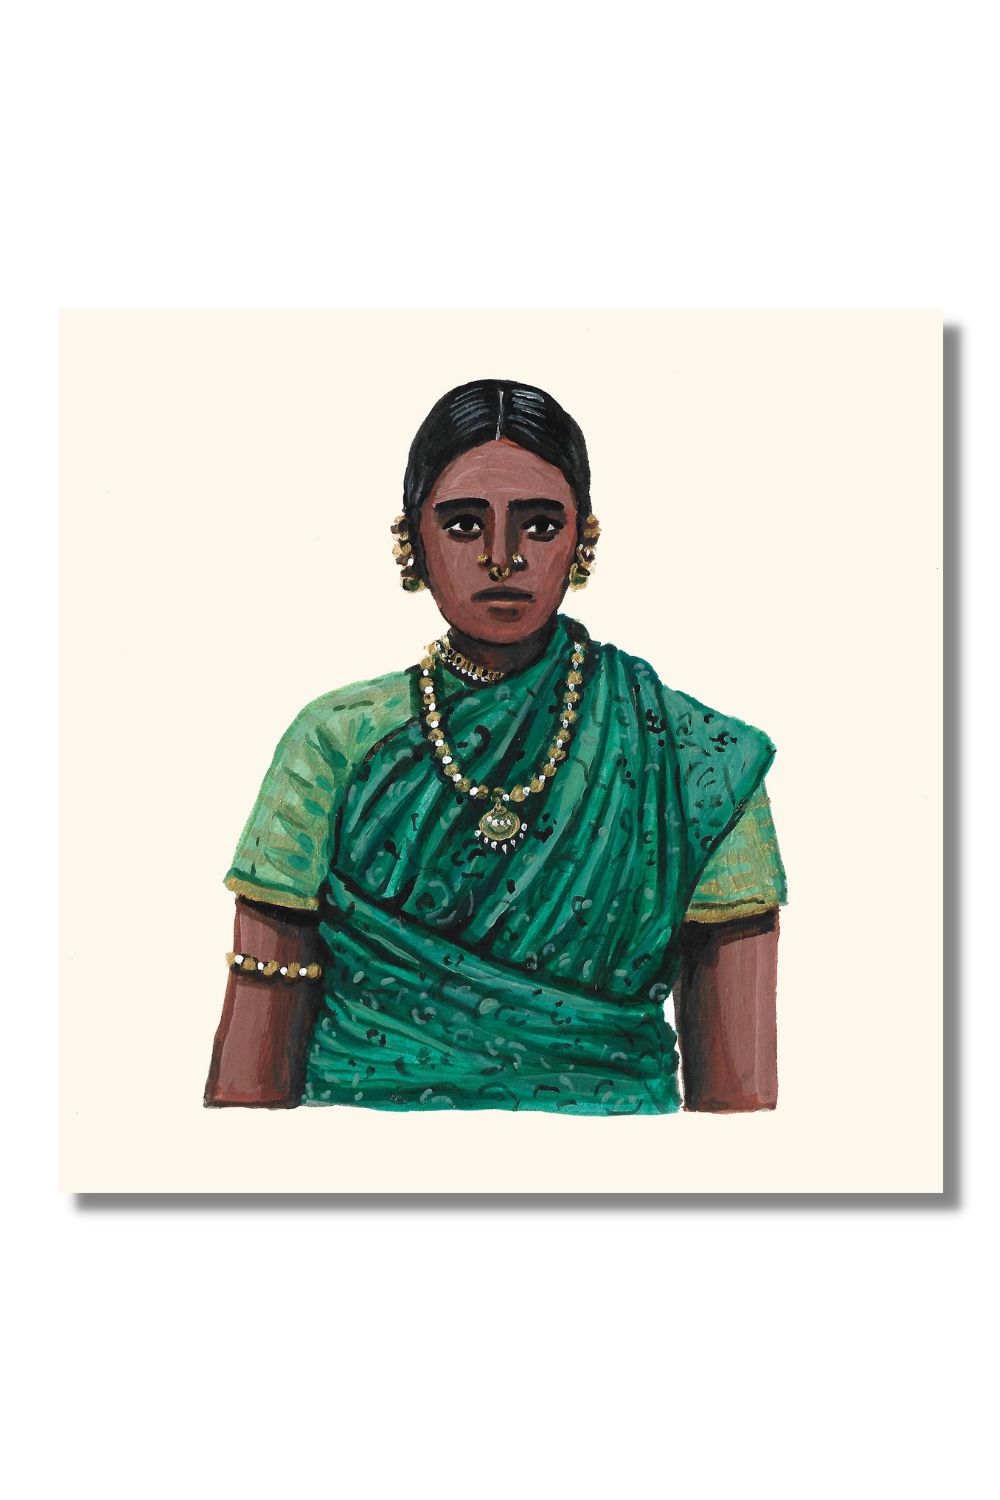 WOMEN OF CEYLON SERIES 2- SET 1 Art Namrata Kumar 